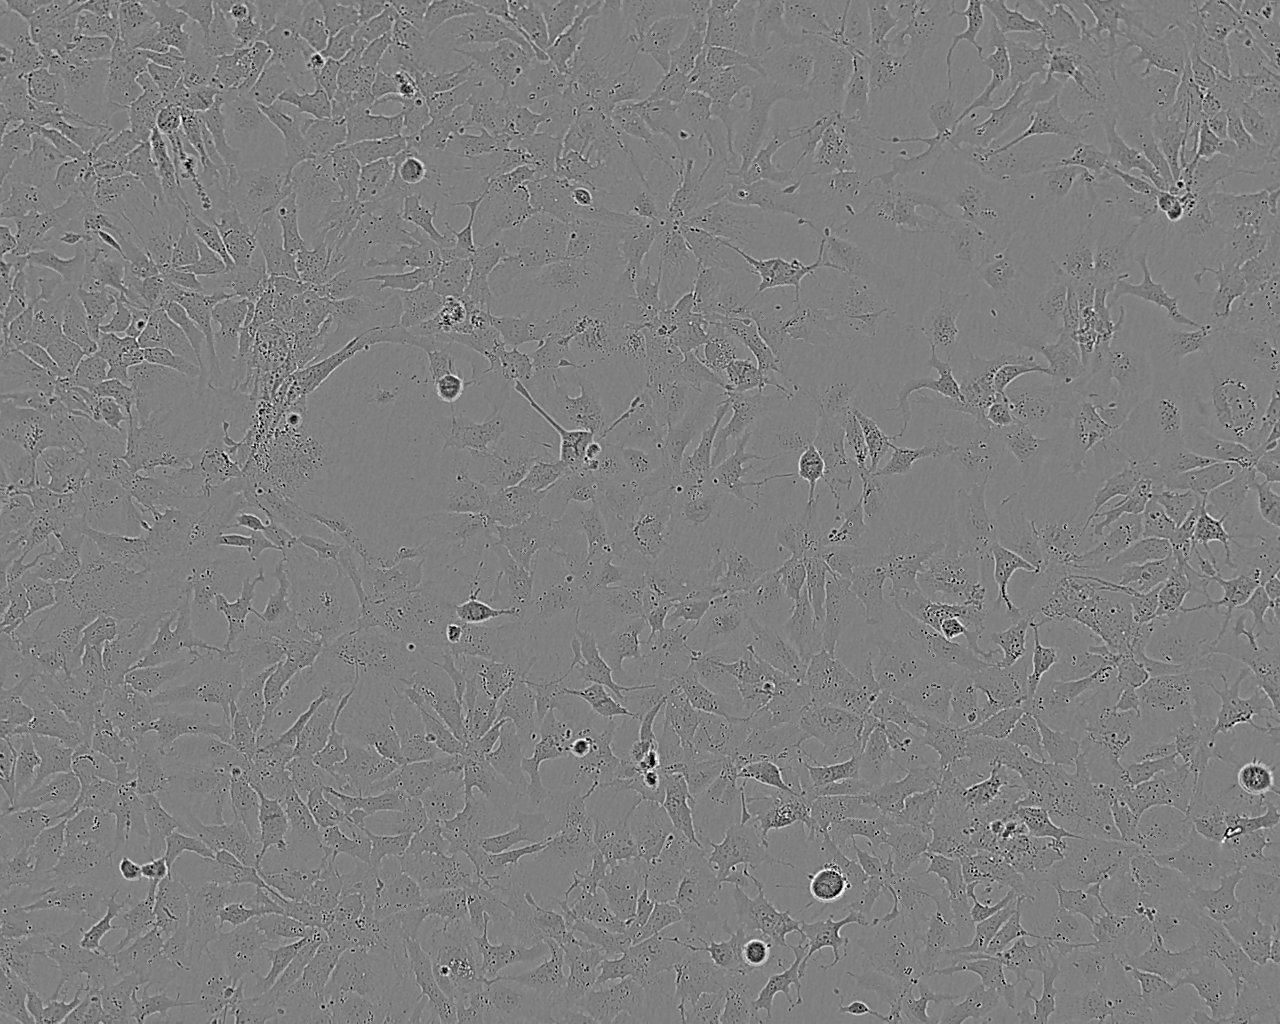 MUG-Chor1 Cell:人骶骨脊索瘤细胞系